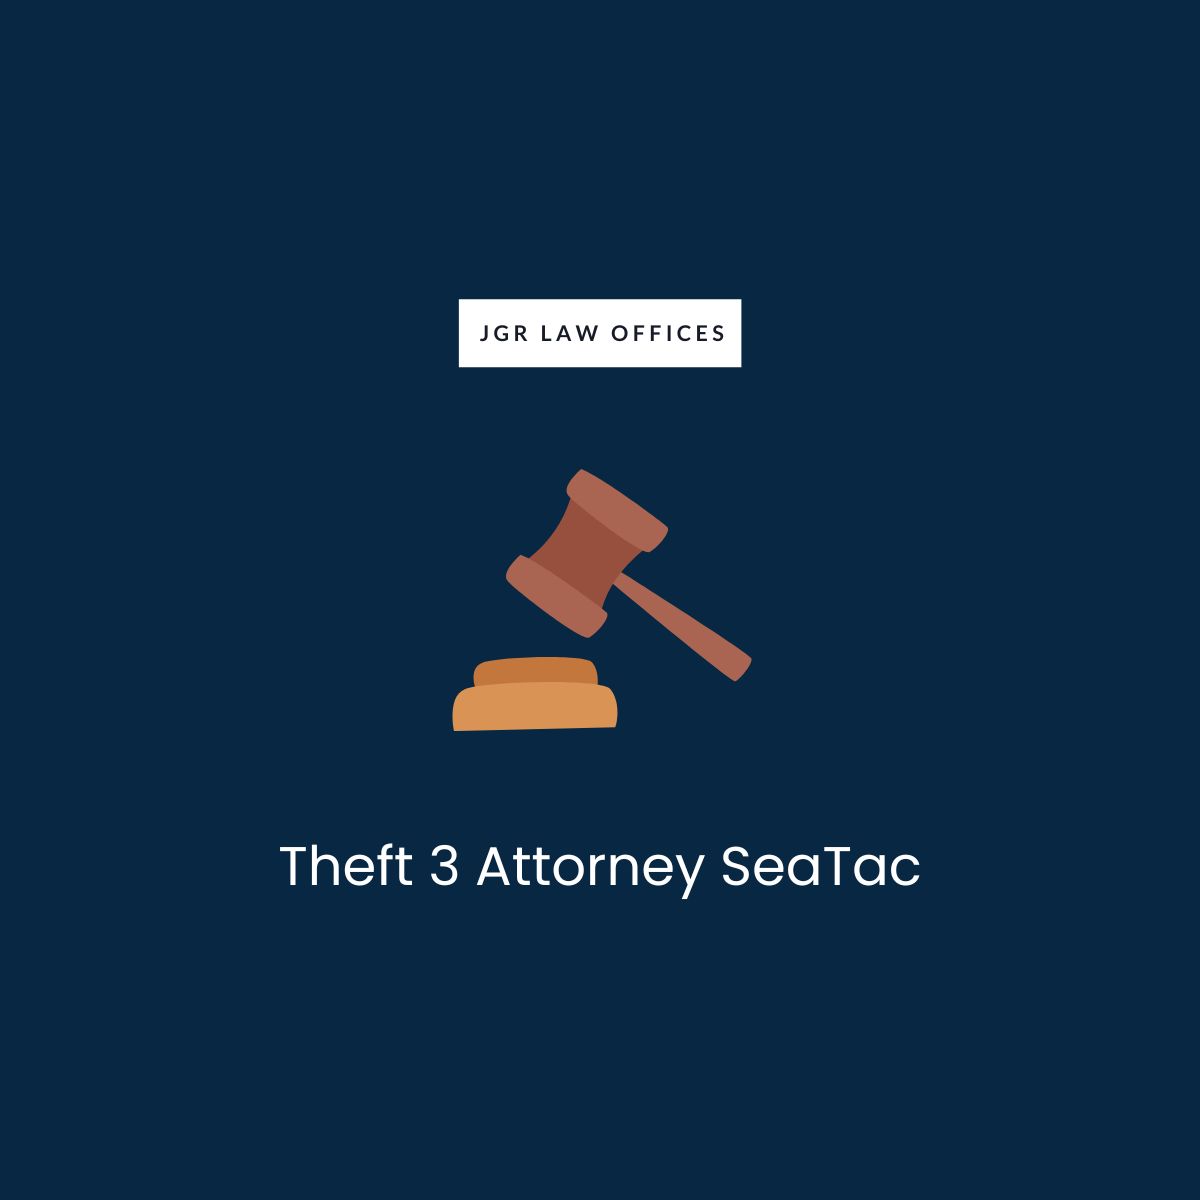 Theft 3 Attorney SeaTac